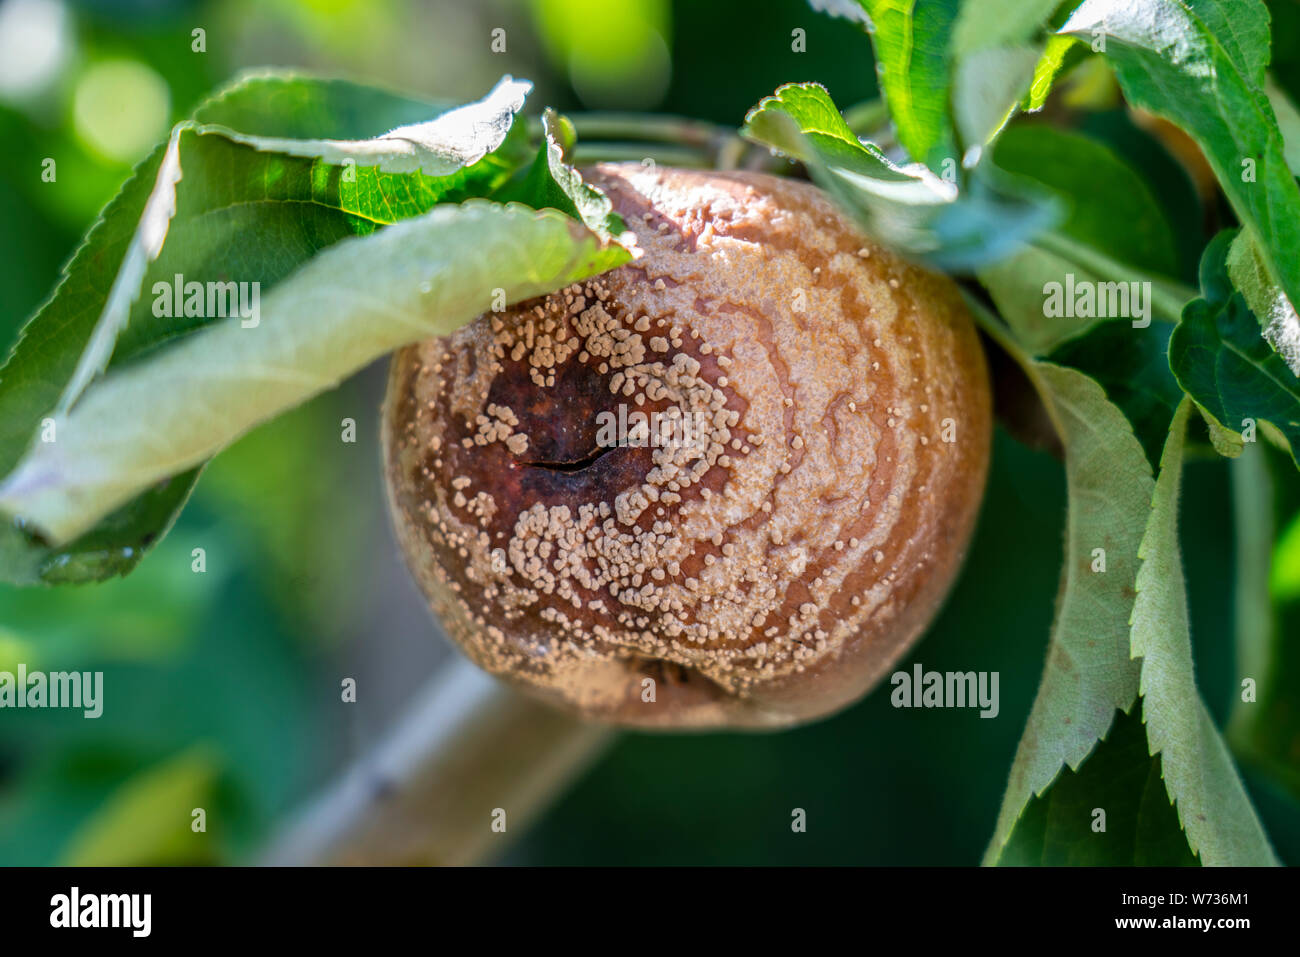 disease apples, Monilia the fungal disease, infected Apple fruit rot closeup Stock Photo